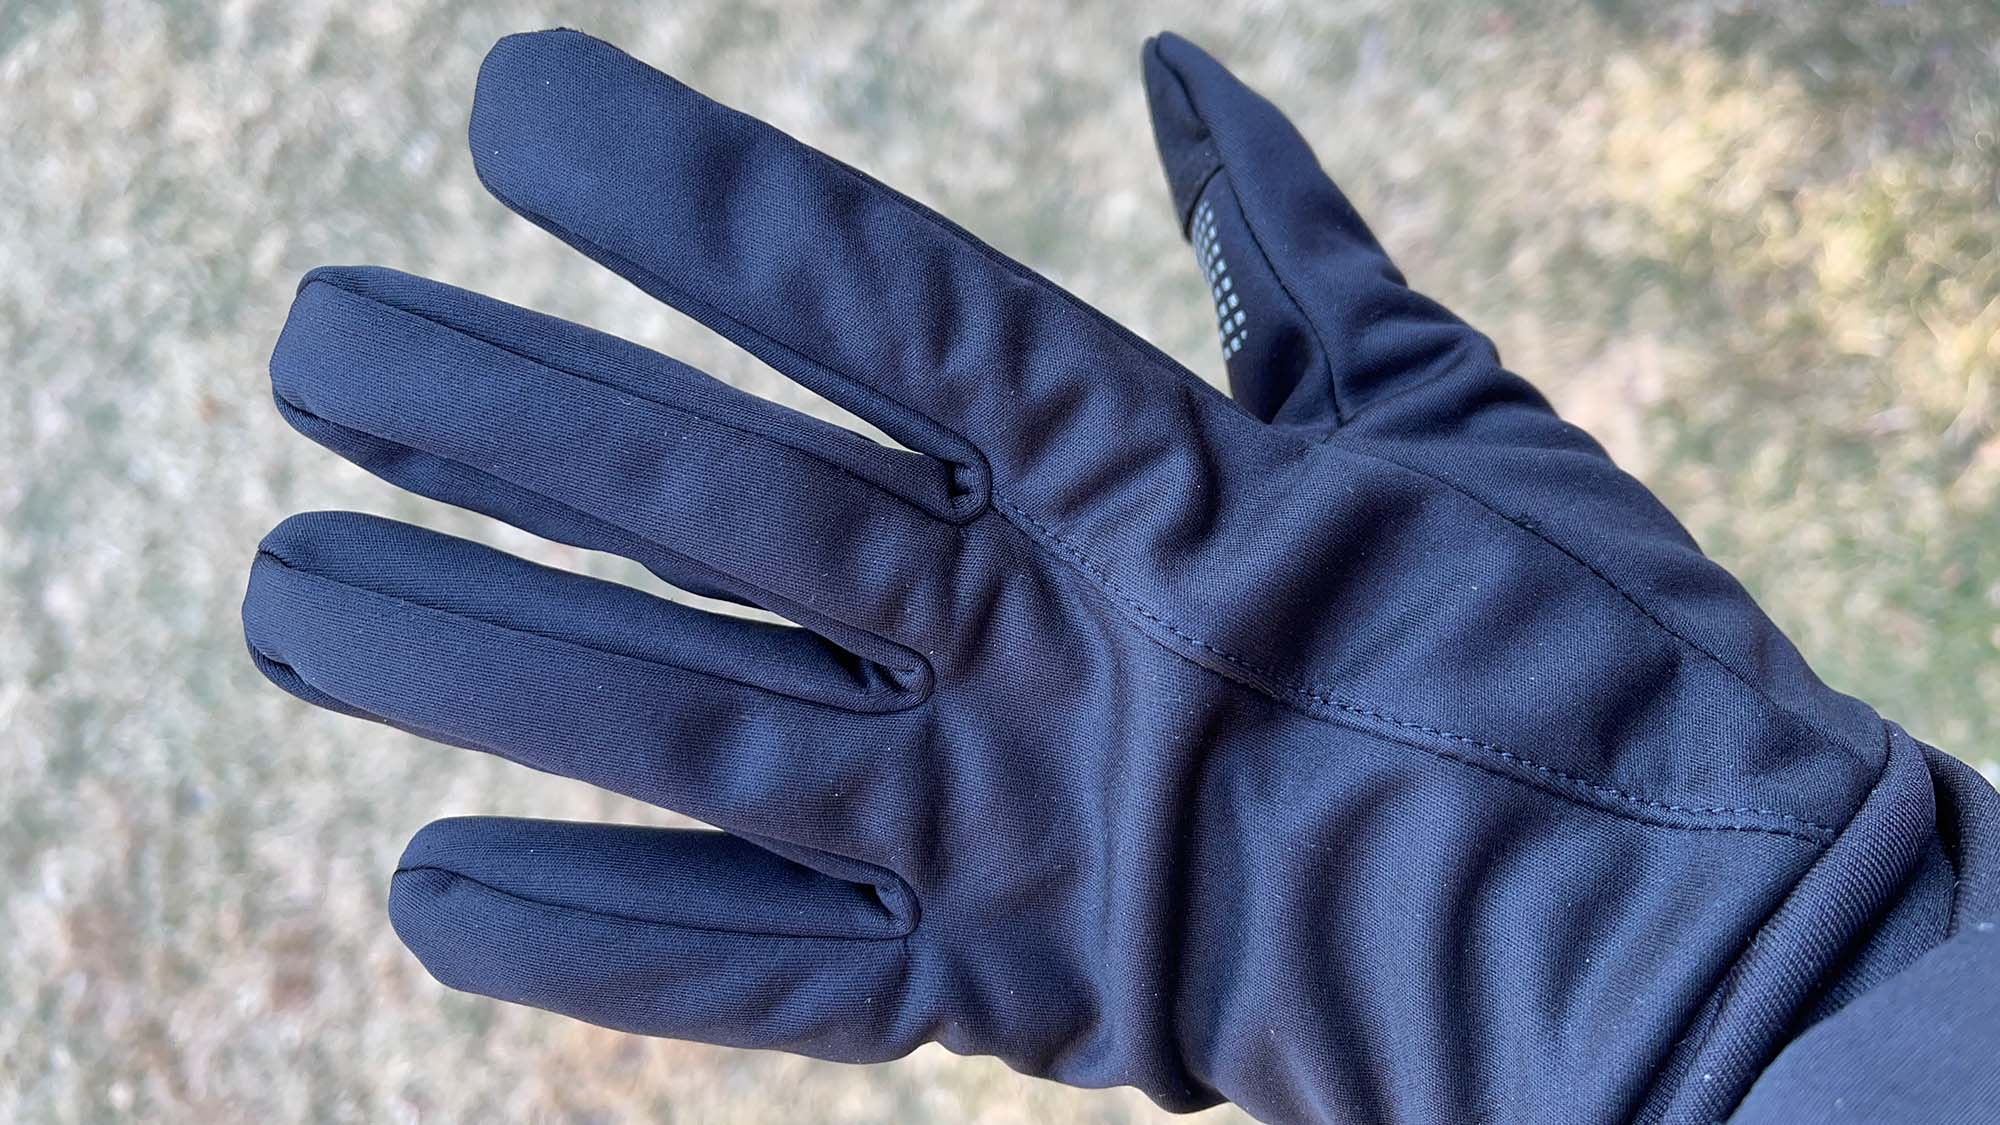 Dokument Forskel Fellow Best touchscreen gloves for cold weather | CNN Underscored